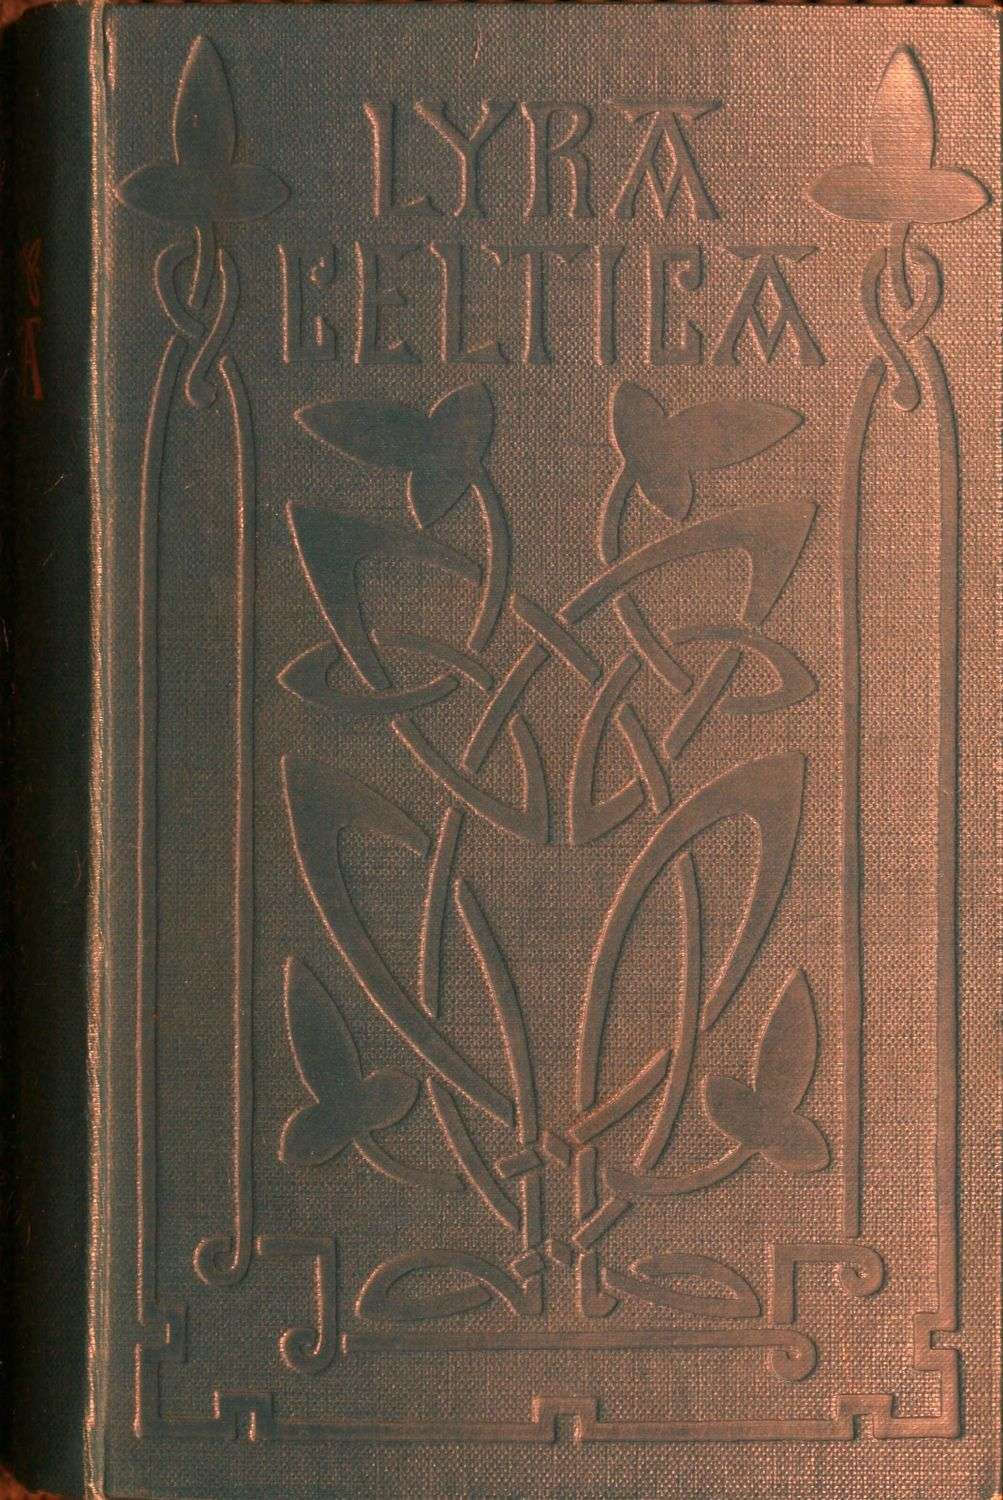 The Project Gutenberg eBook of Lyra Celtica.